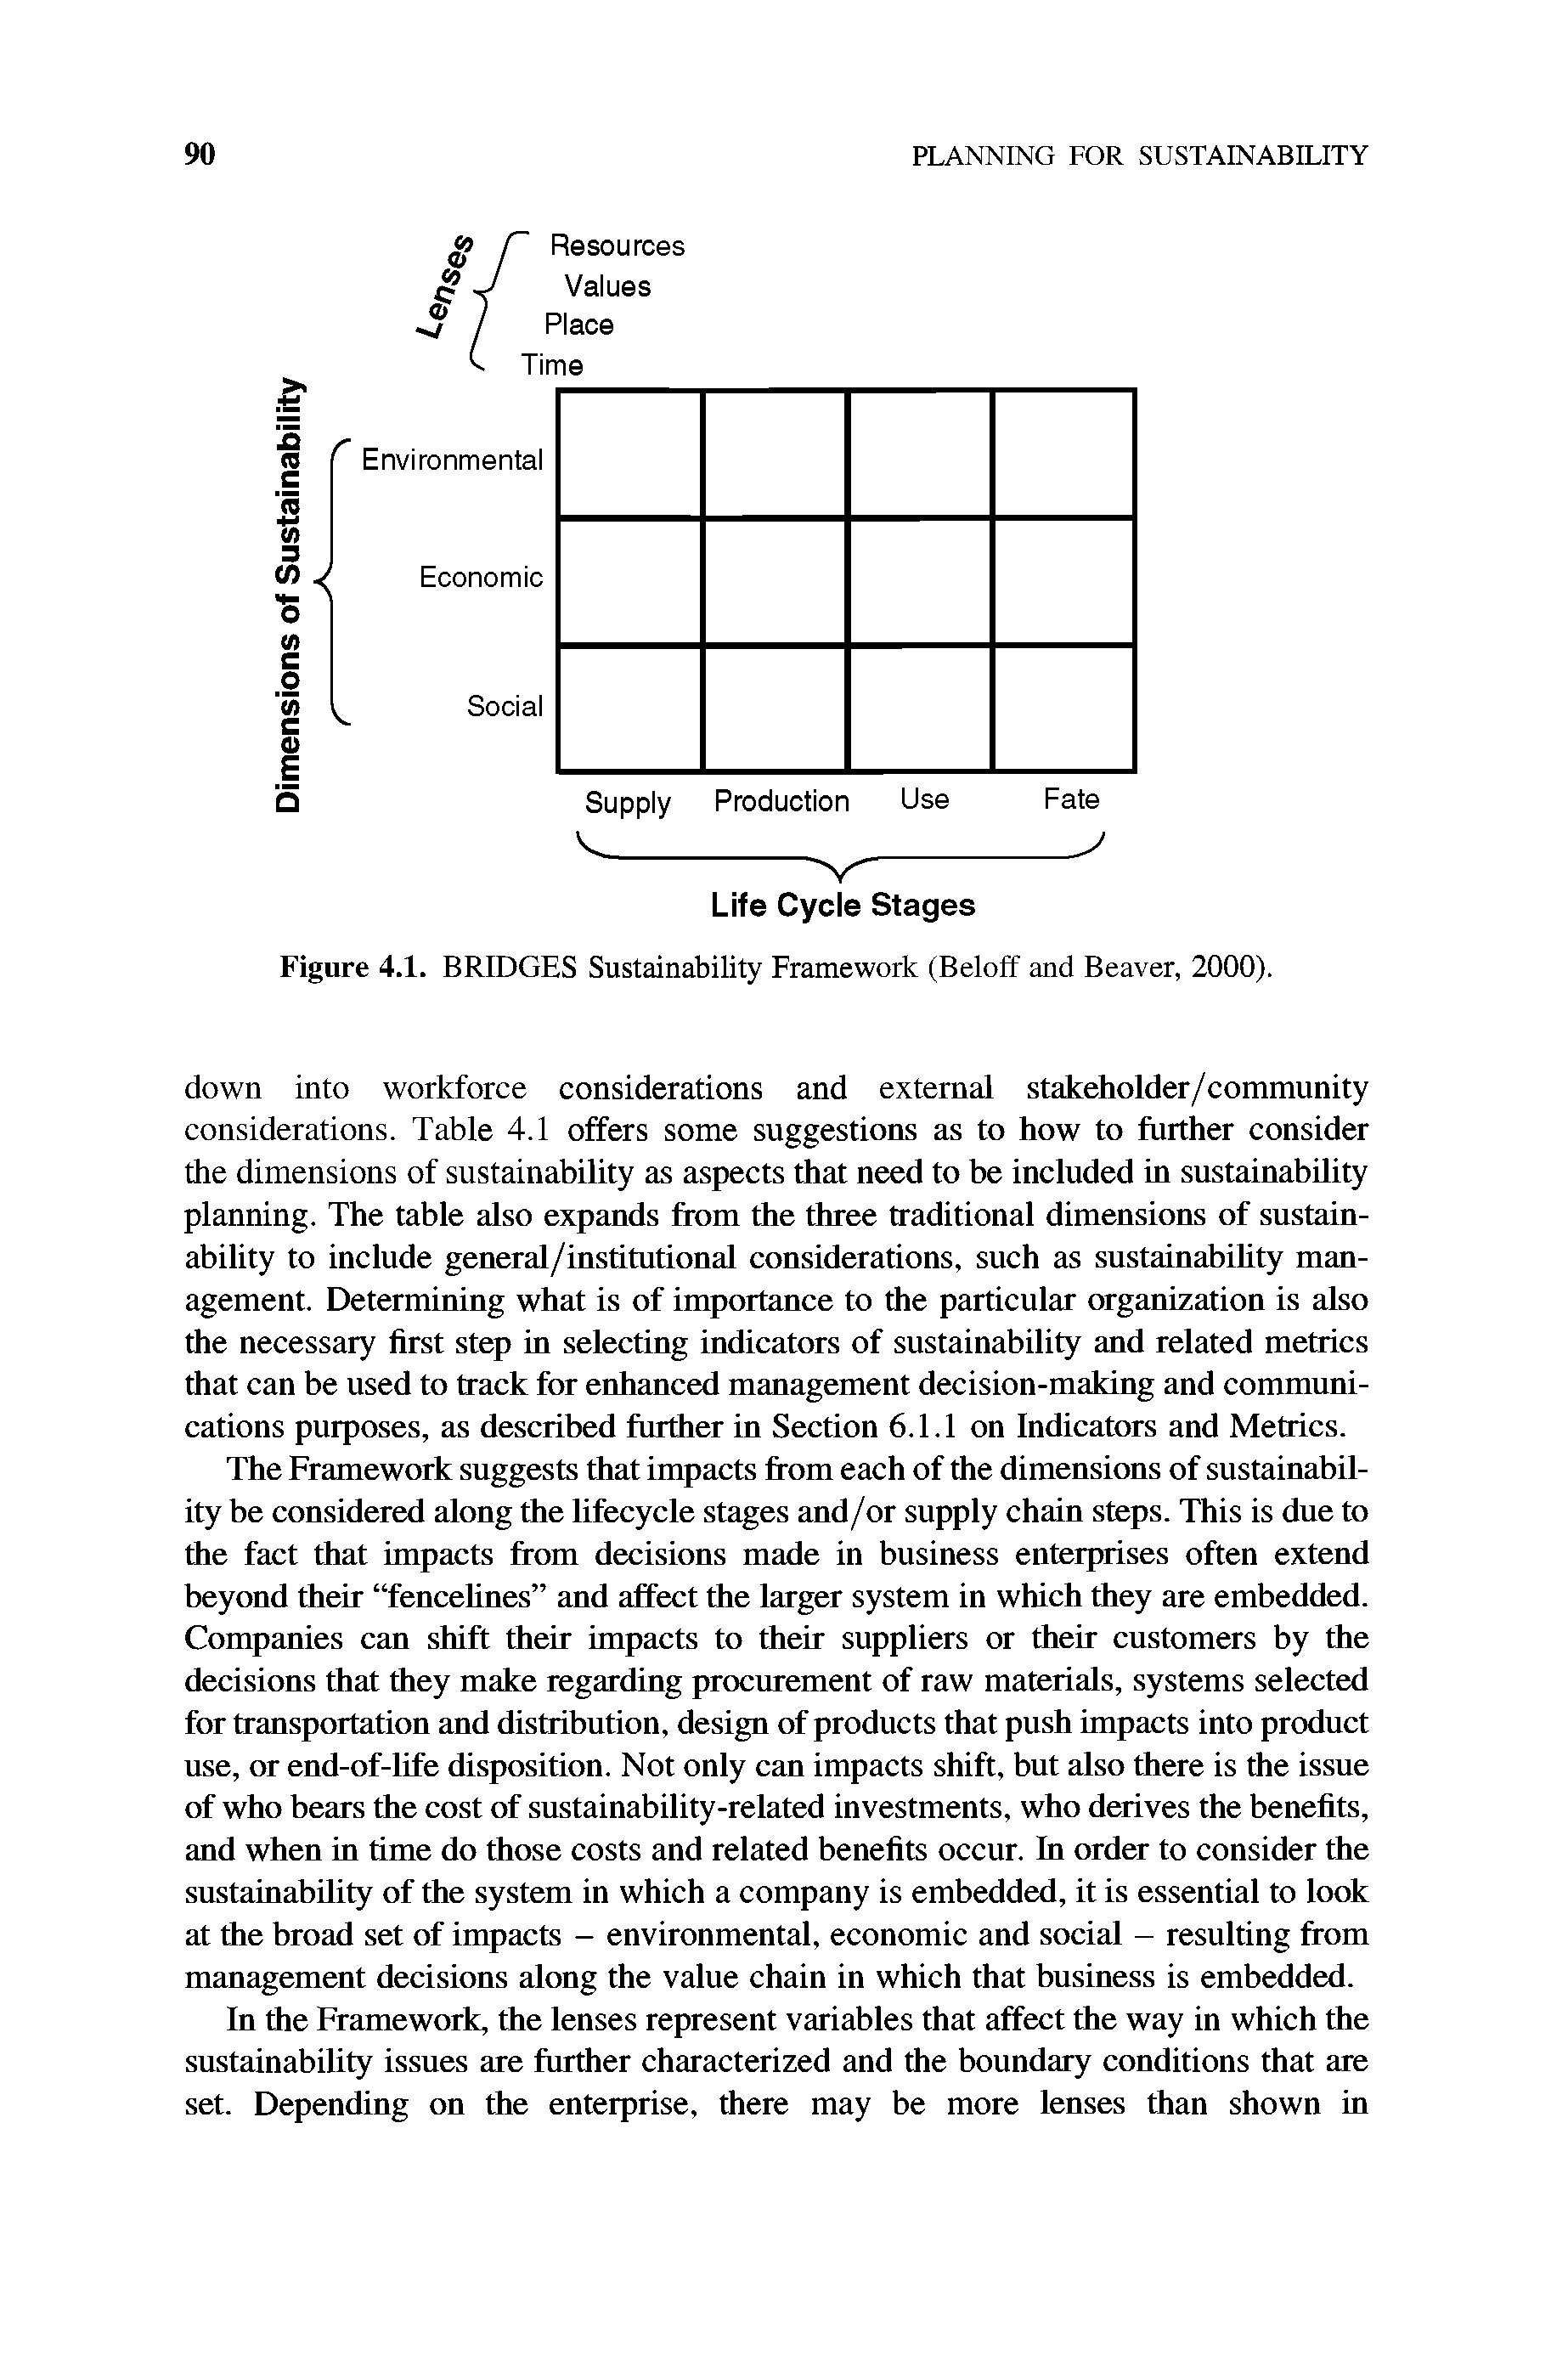 Figure 4.1. BRIDGES Sustainability Framework (Beloff and Beaver, 2000).